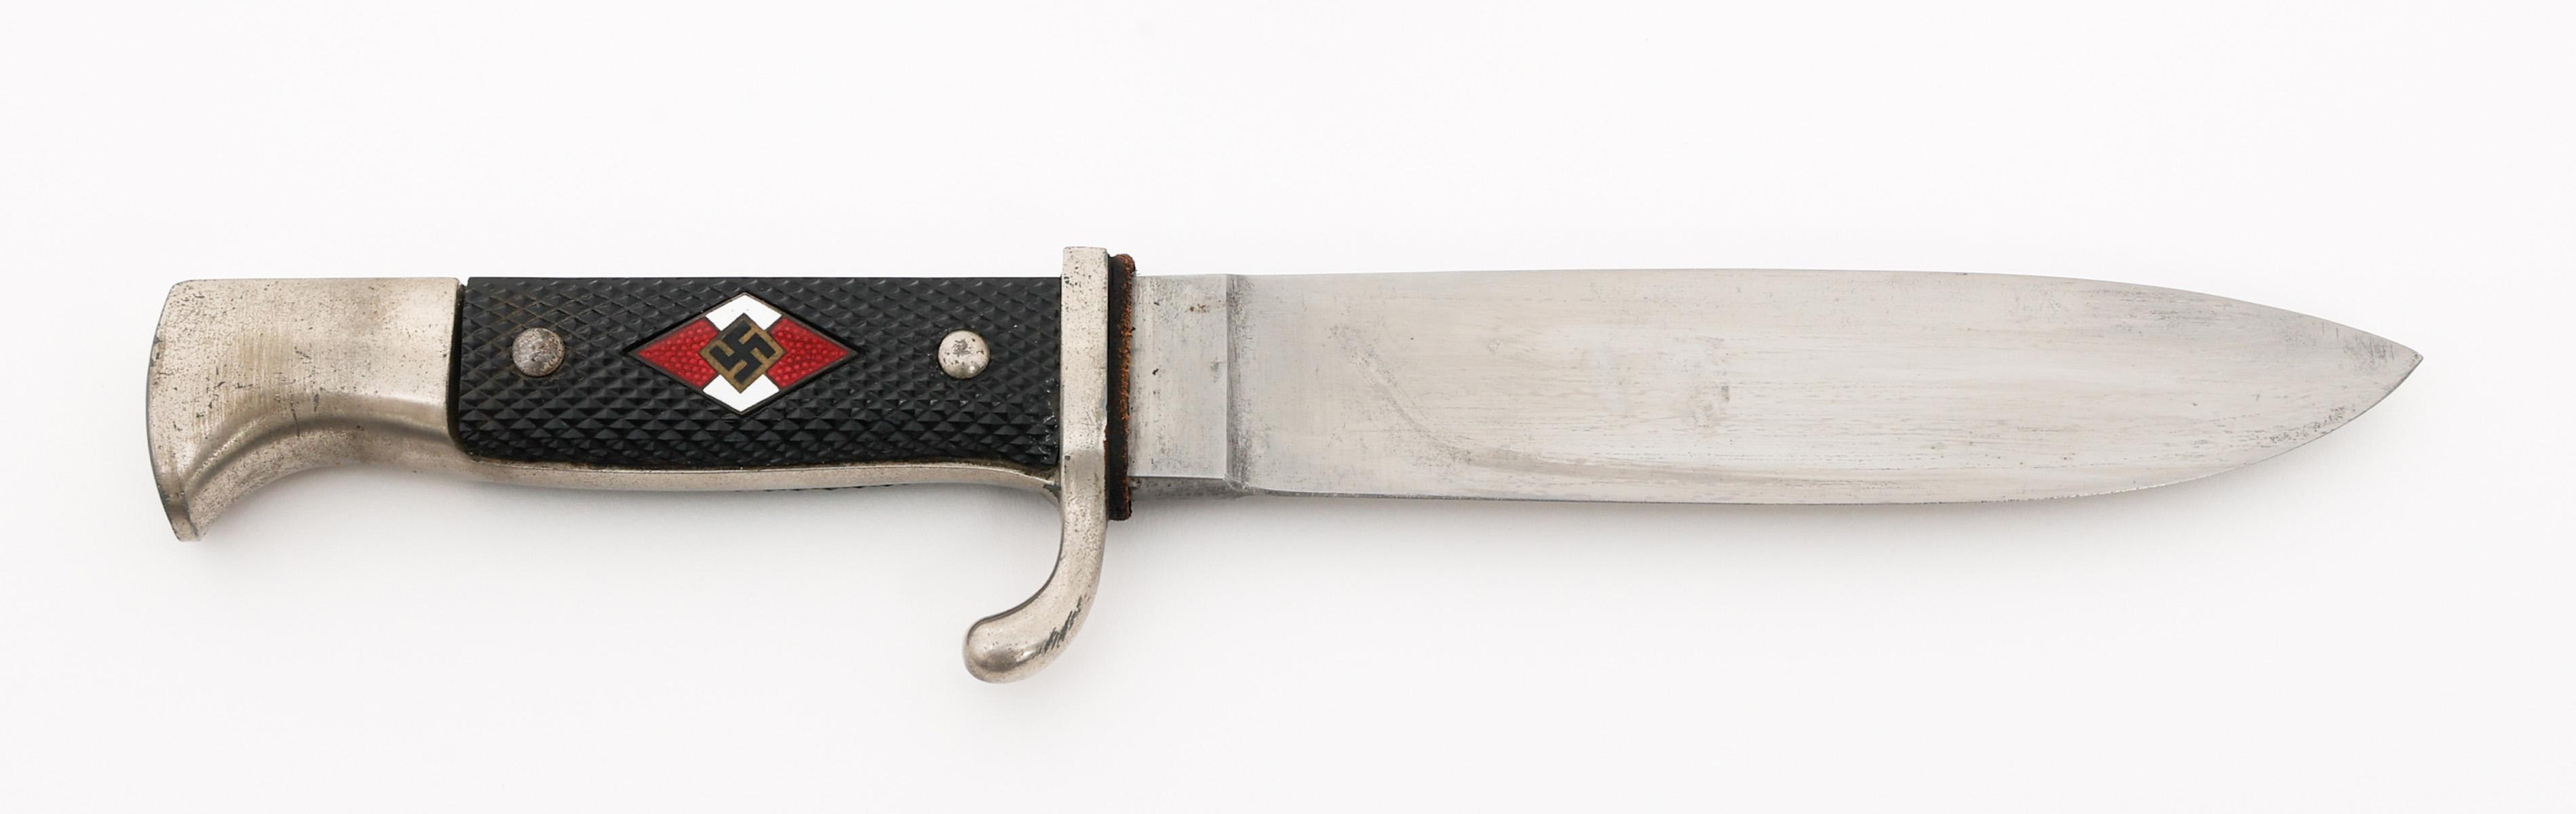 WWII GERMAN HITLER YOUTH KNIFE by KARL BOCKER